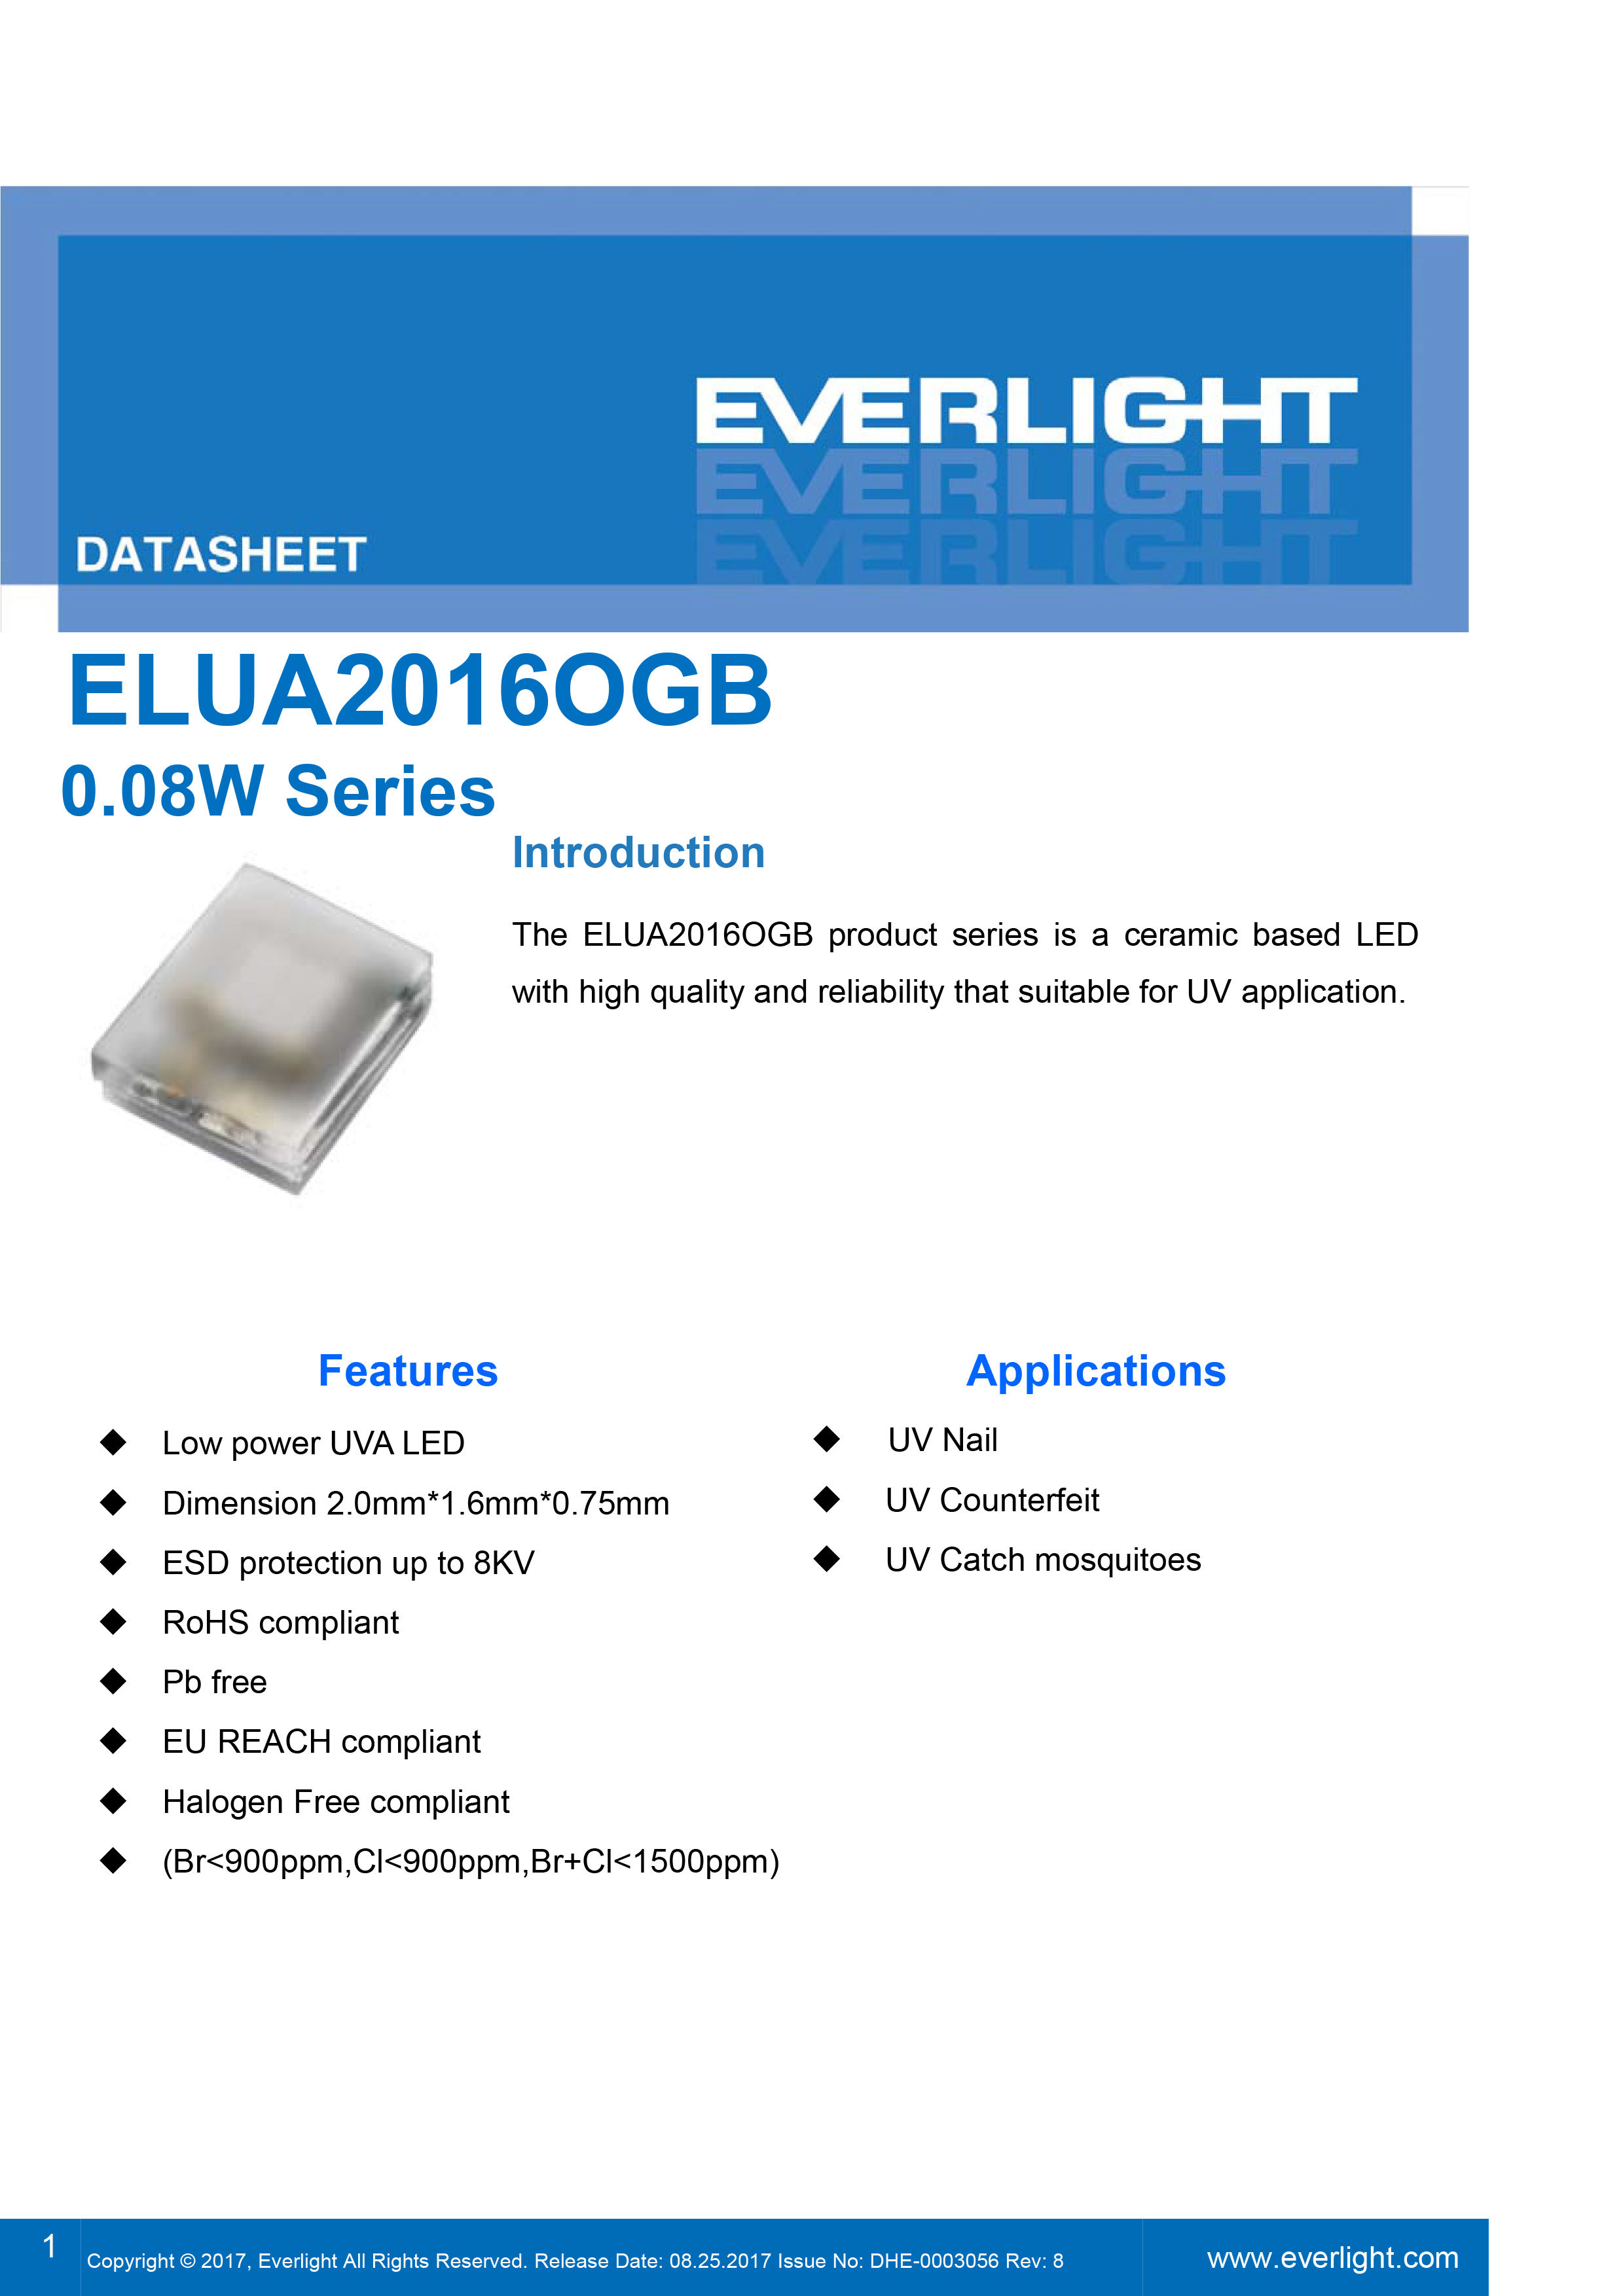 EVERLIGHT SMD 0.08W UV LED ELUA2016OGB-P9000Q53040020-VA1M Datasheet